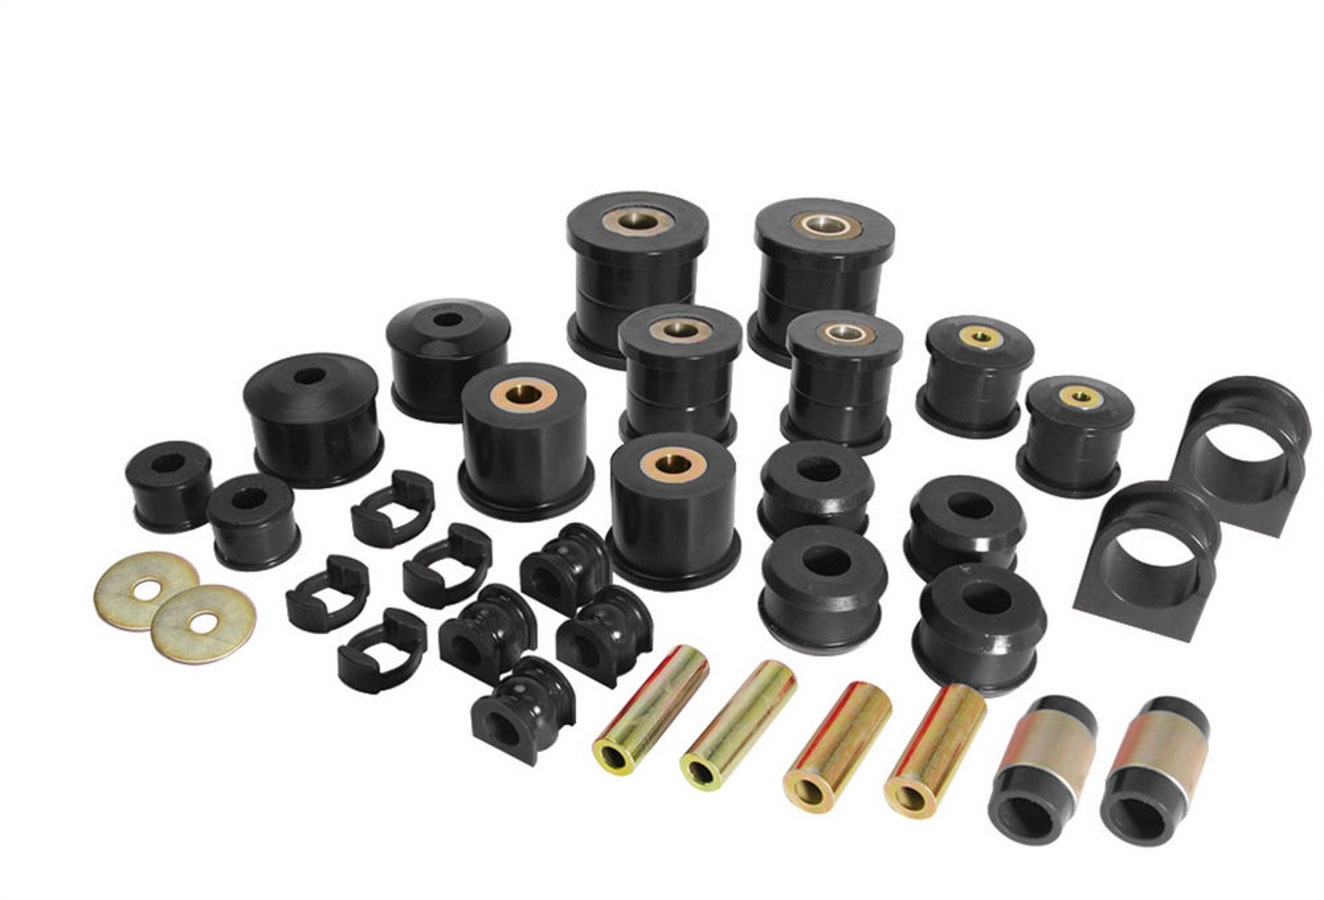 Prothane Bushing Kit, Rack/Subframe/Suspension Bushings, Inserts, Polyurethane, Black, Chevy Camaro 2010-12, Kit